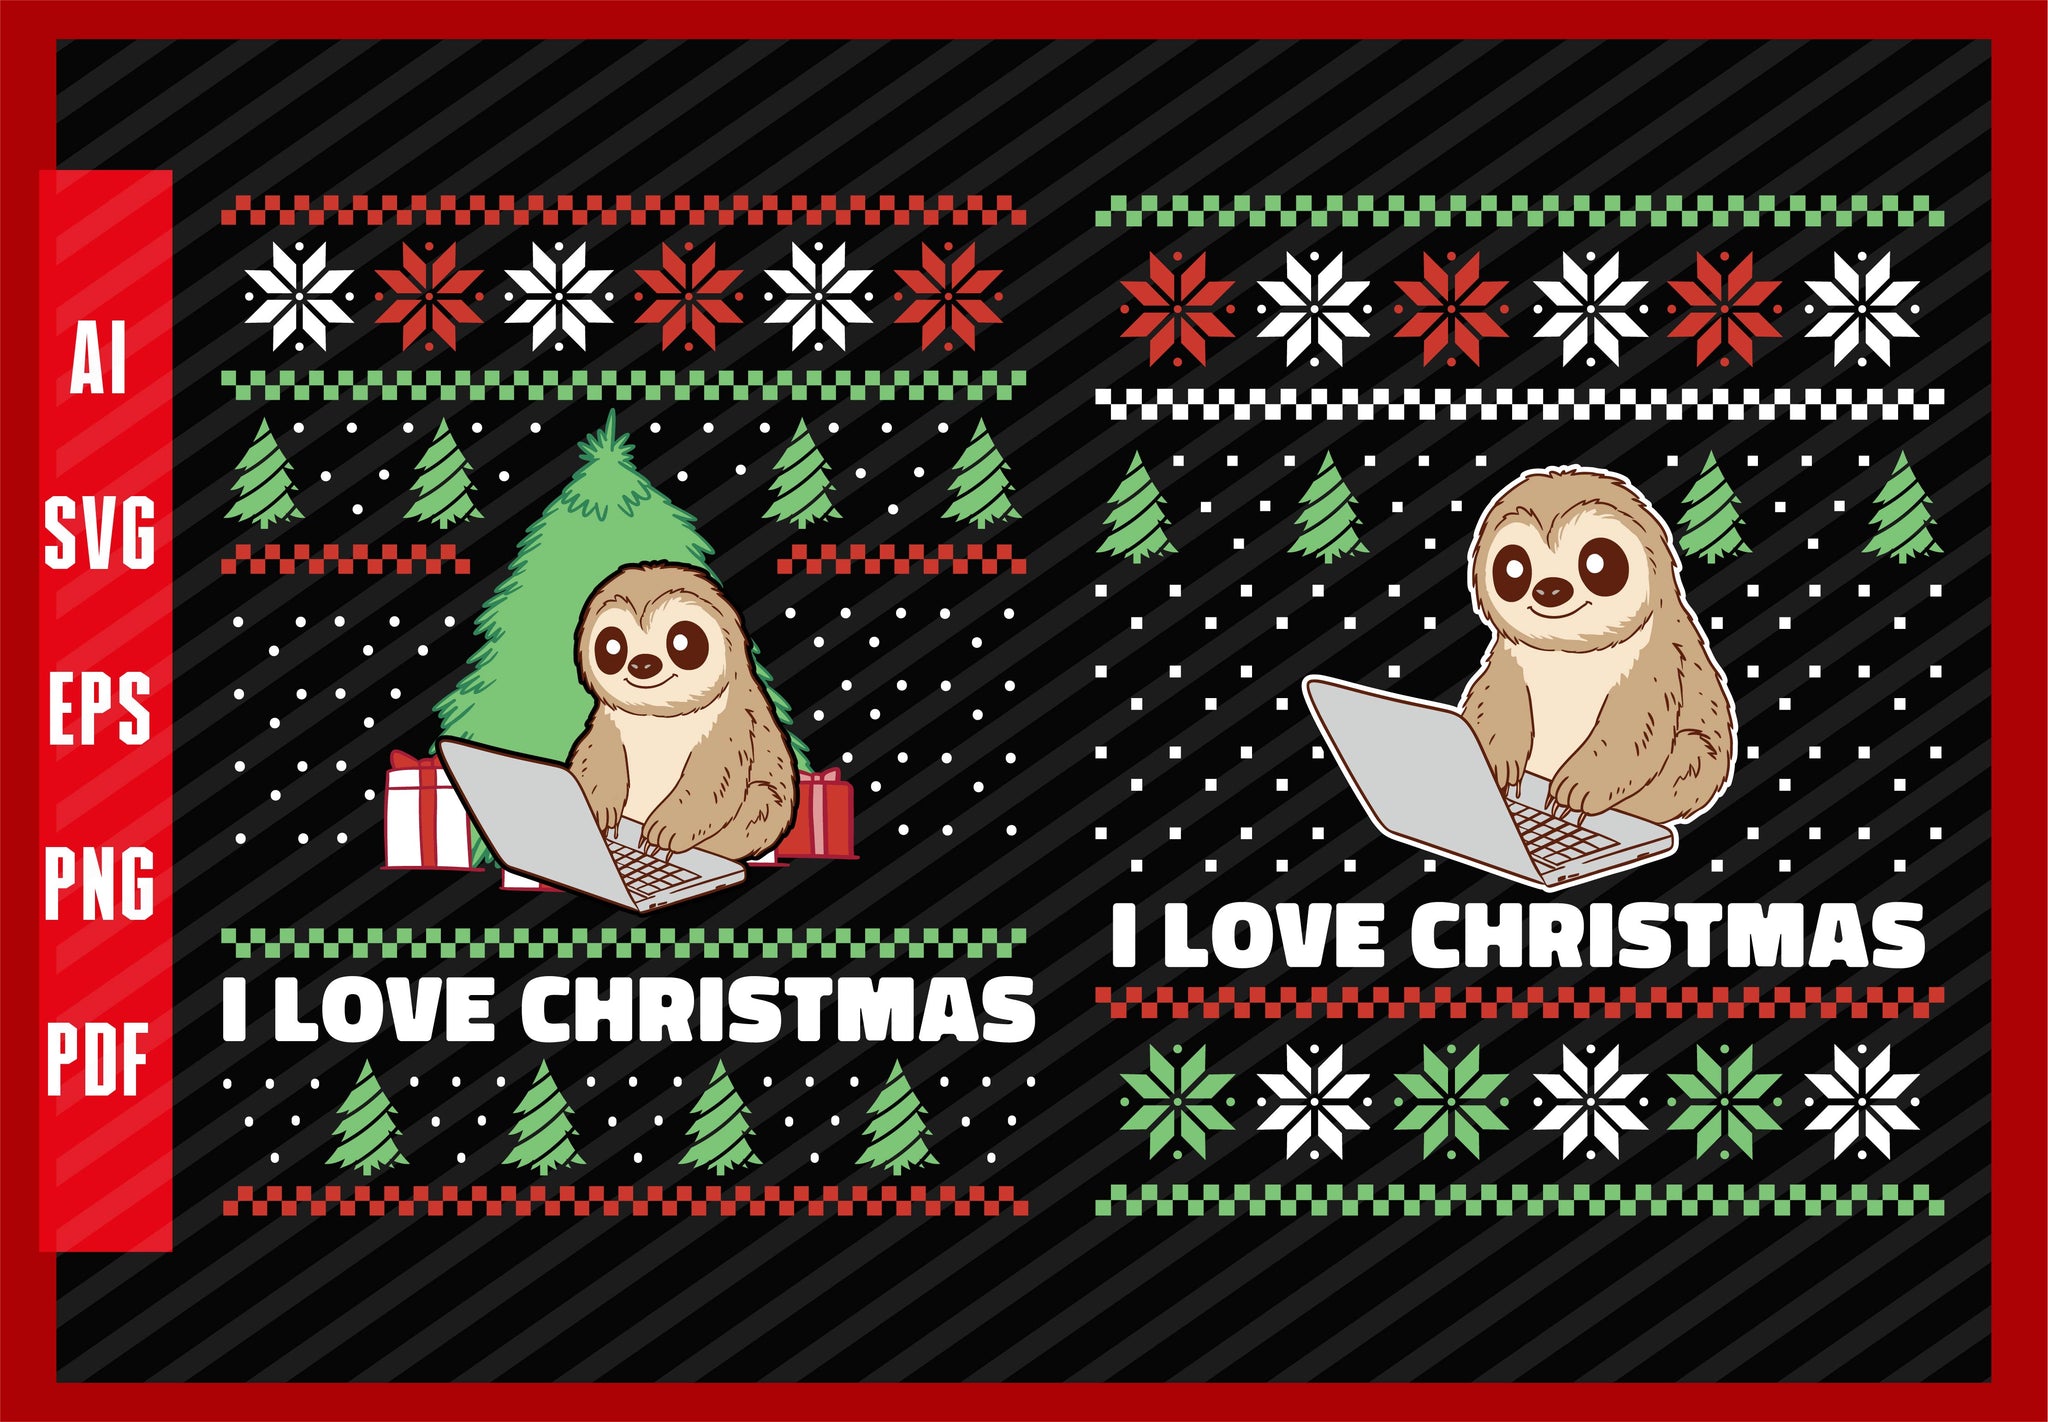 Sloth Using Computer Funny Animals Lover Design, I Love Christmas T-Shirt Design Eps, Ai, Png, Svg and Pdf Printable Files